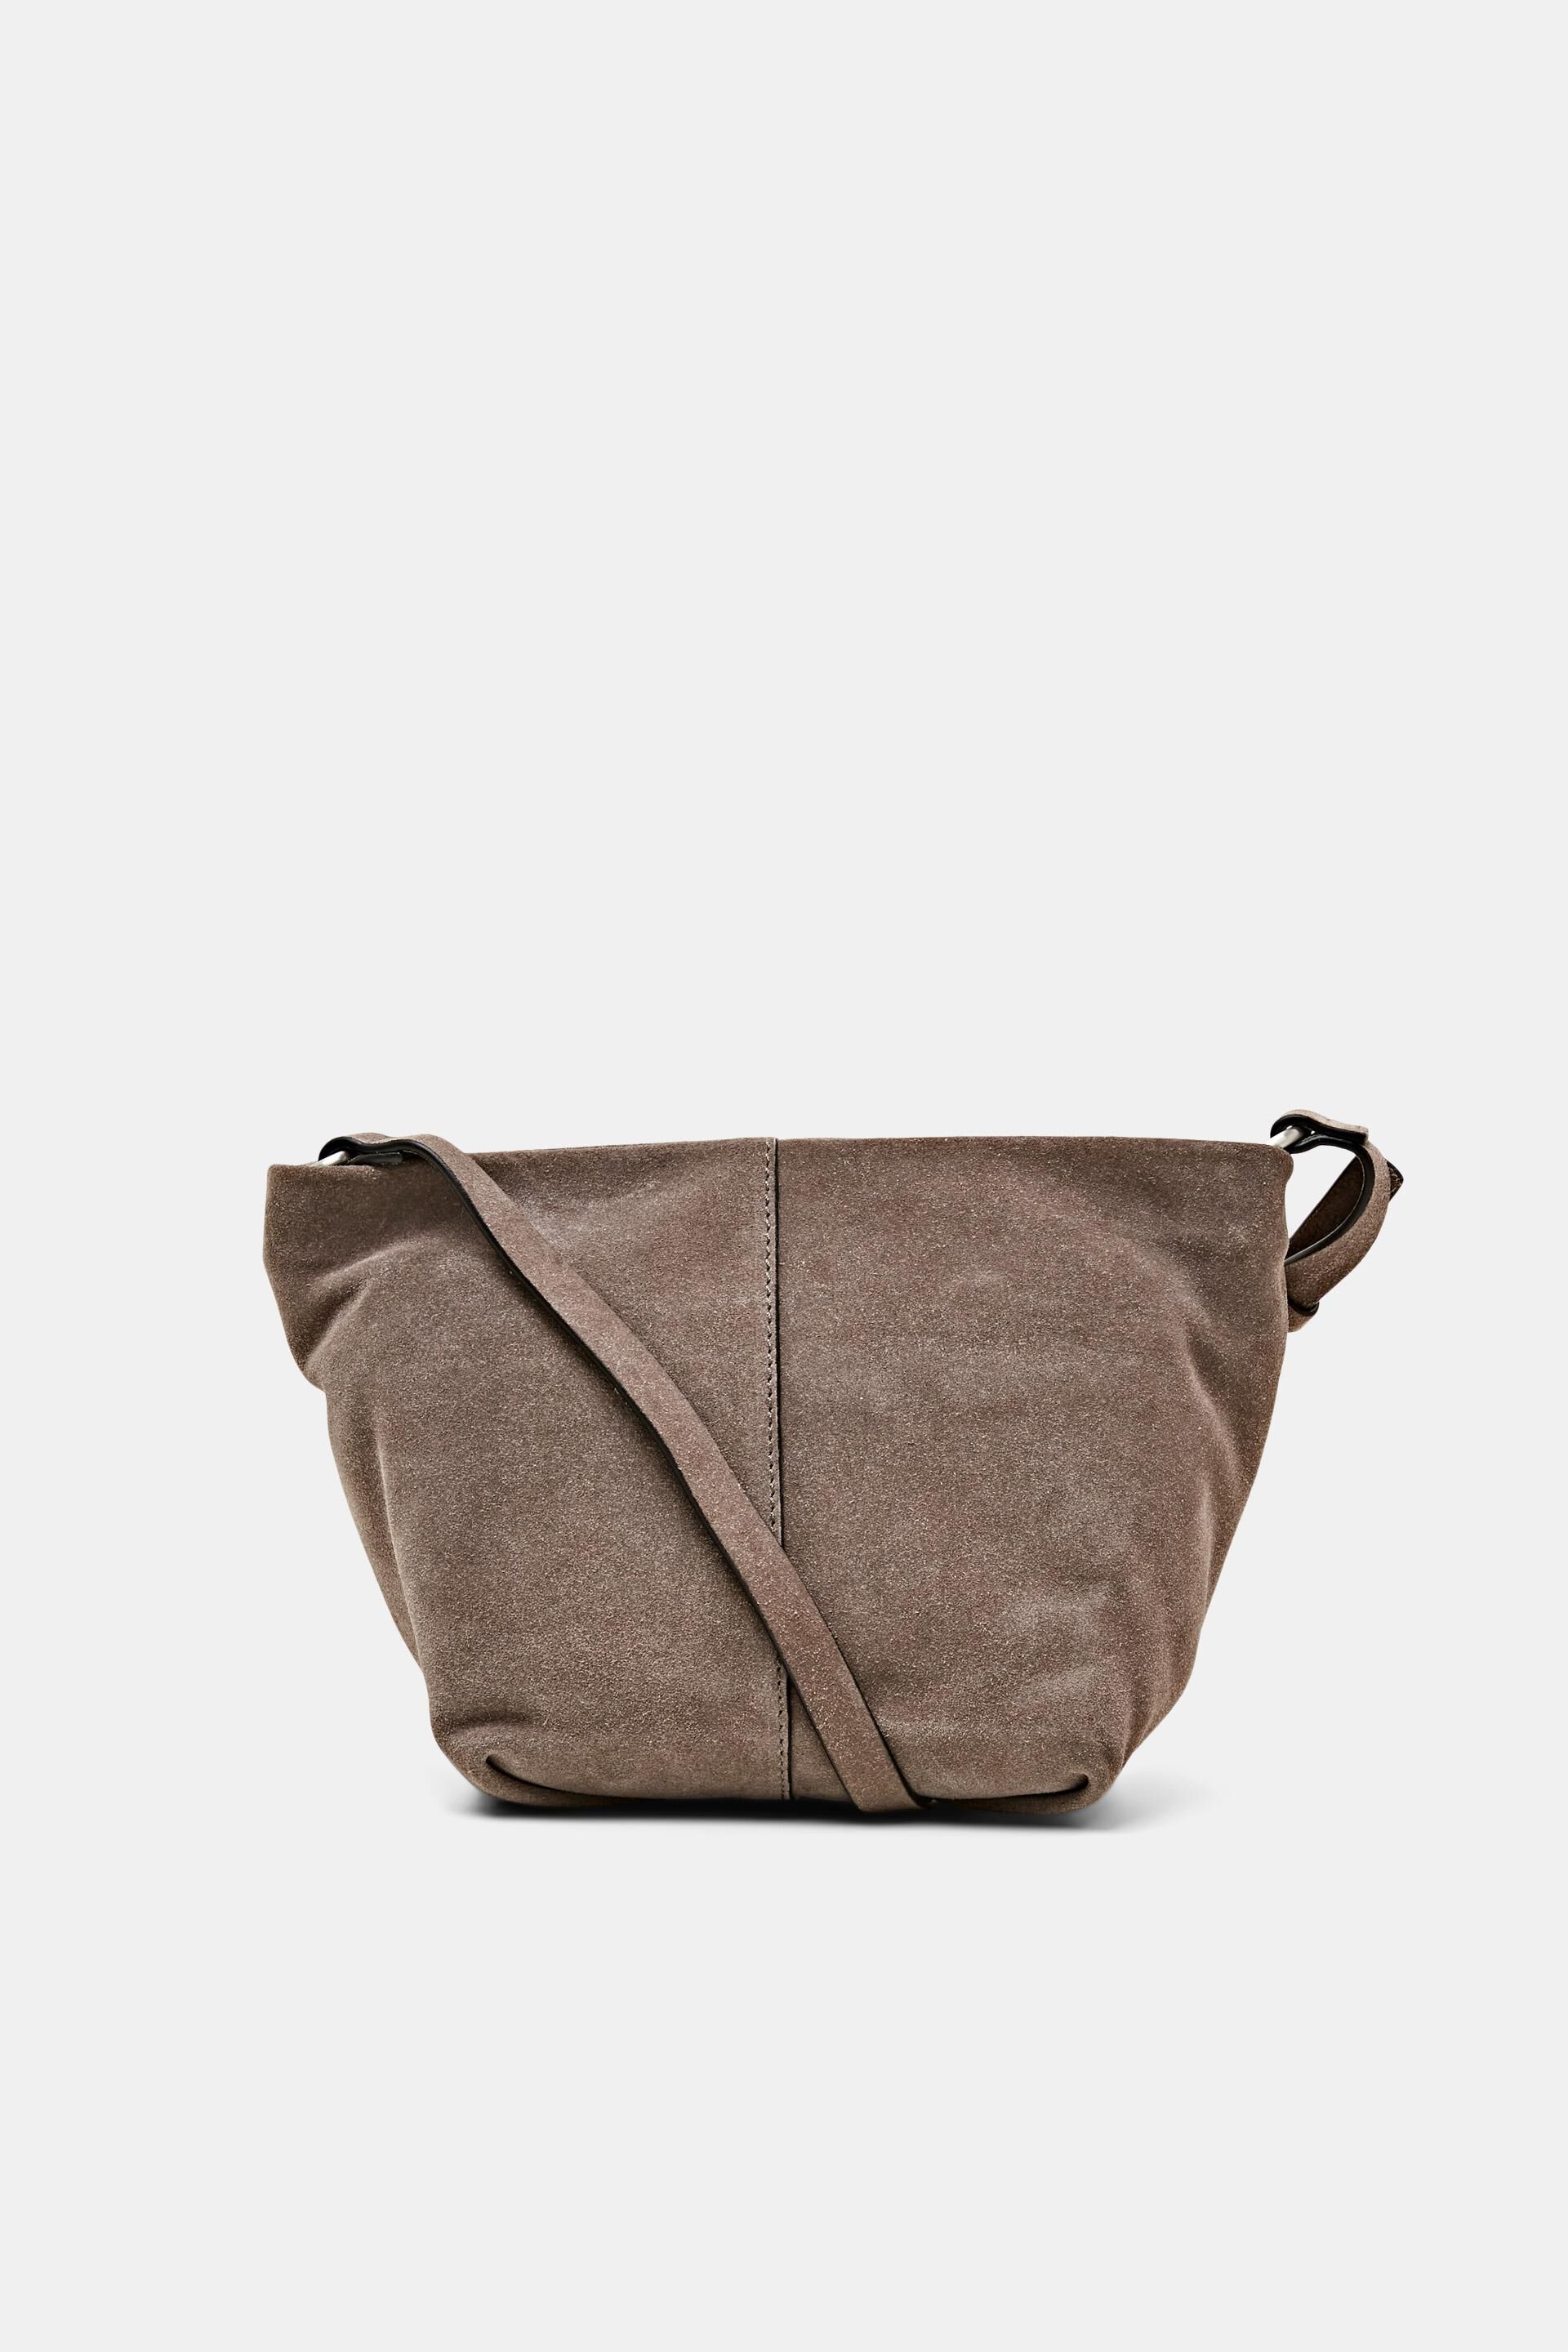 Esprit leather Bags